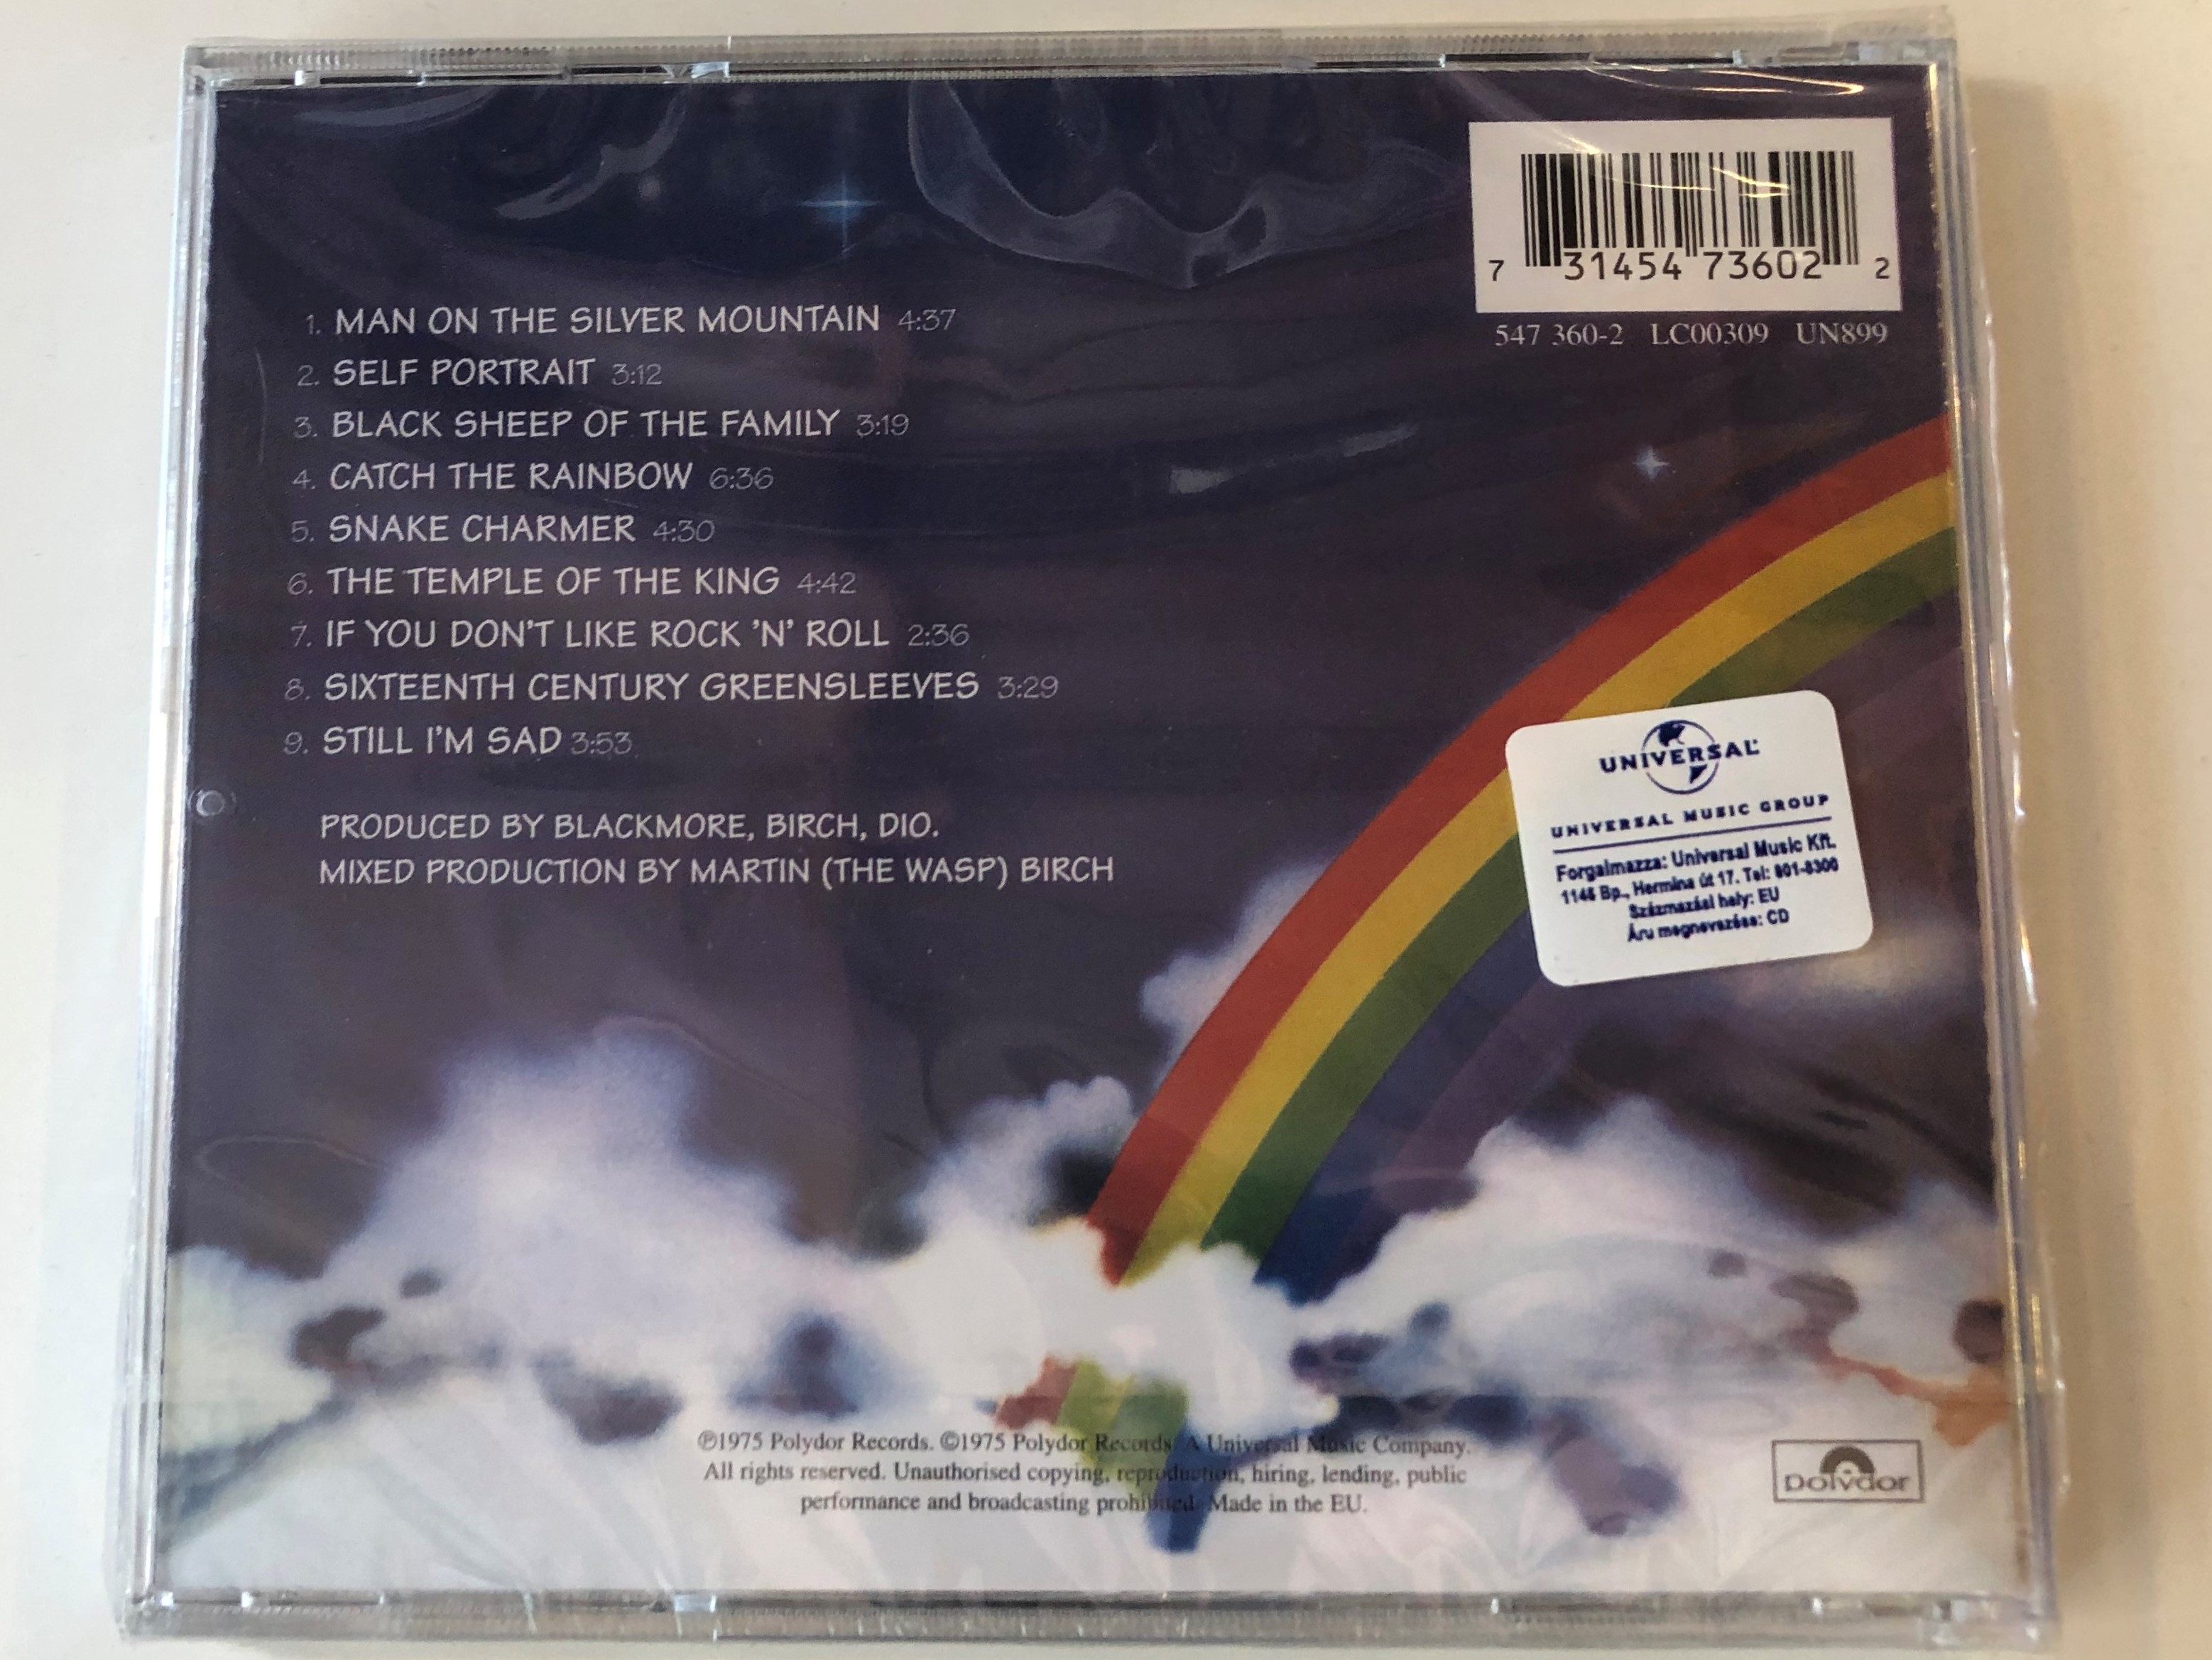 ritchie-blackmore-s-rainbow-the-rainbow-remasters-polydor-audio-cd-1975-547-360-2-2-.jpg